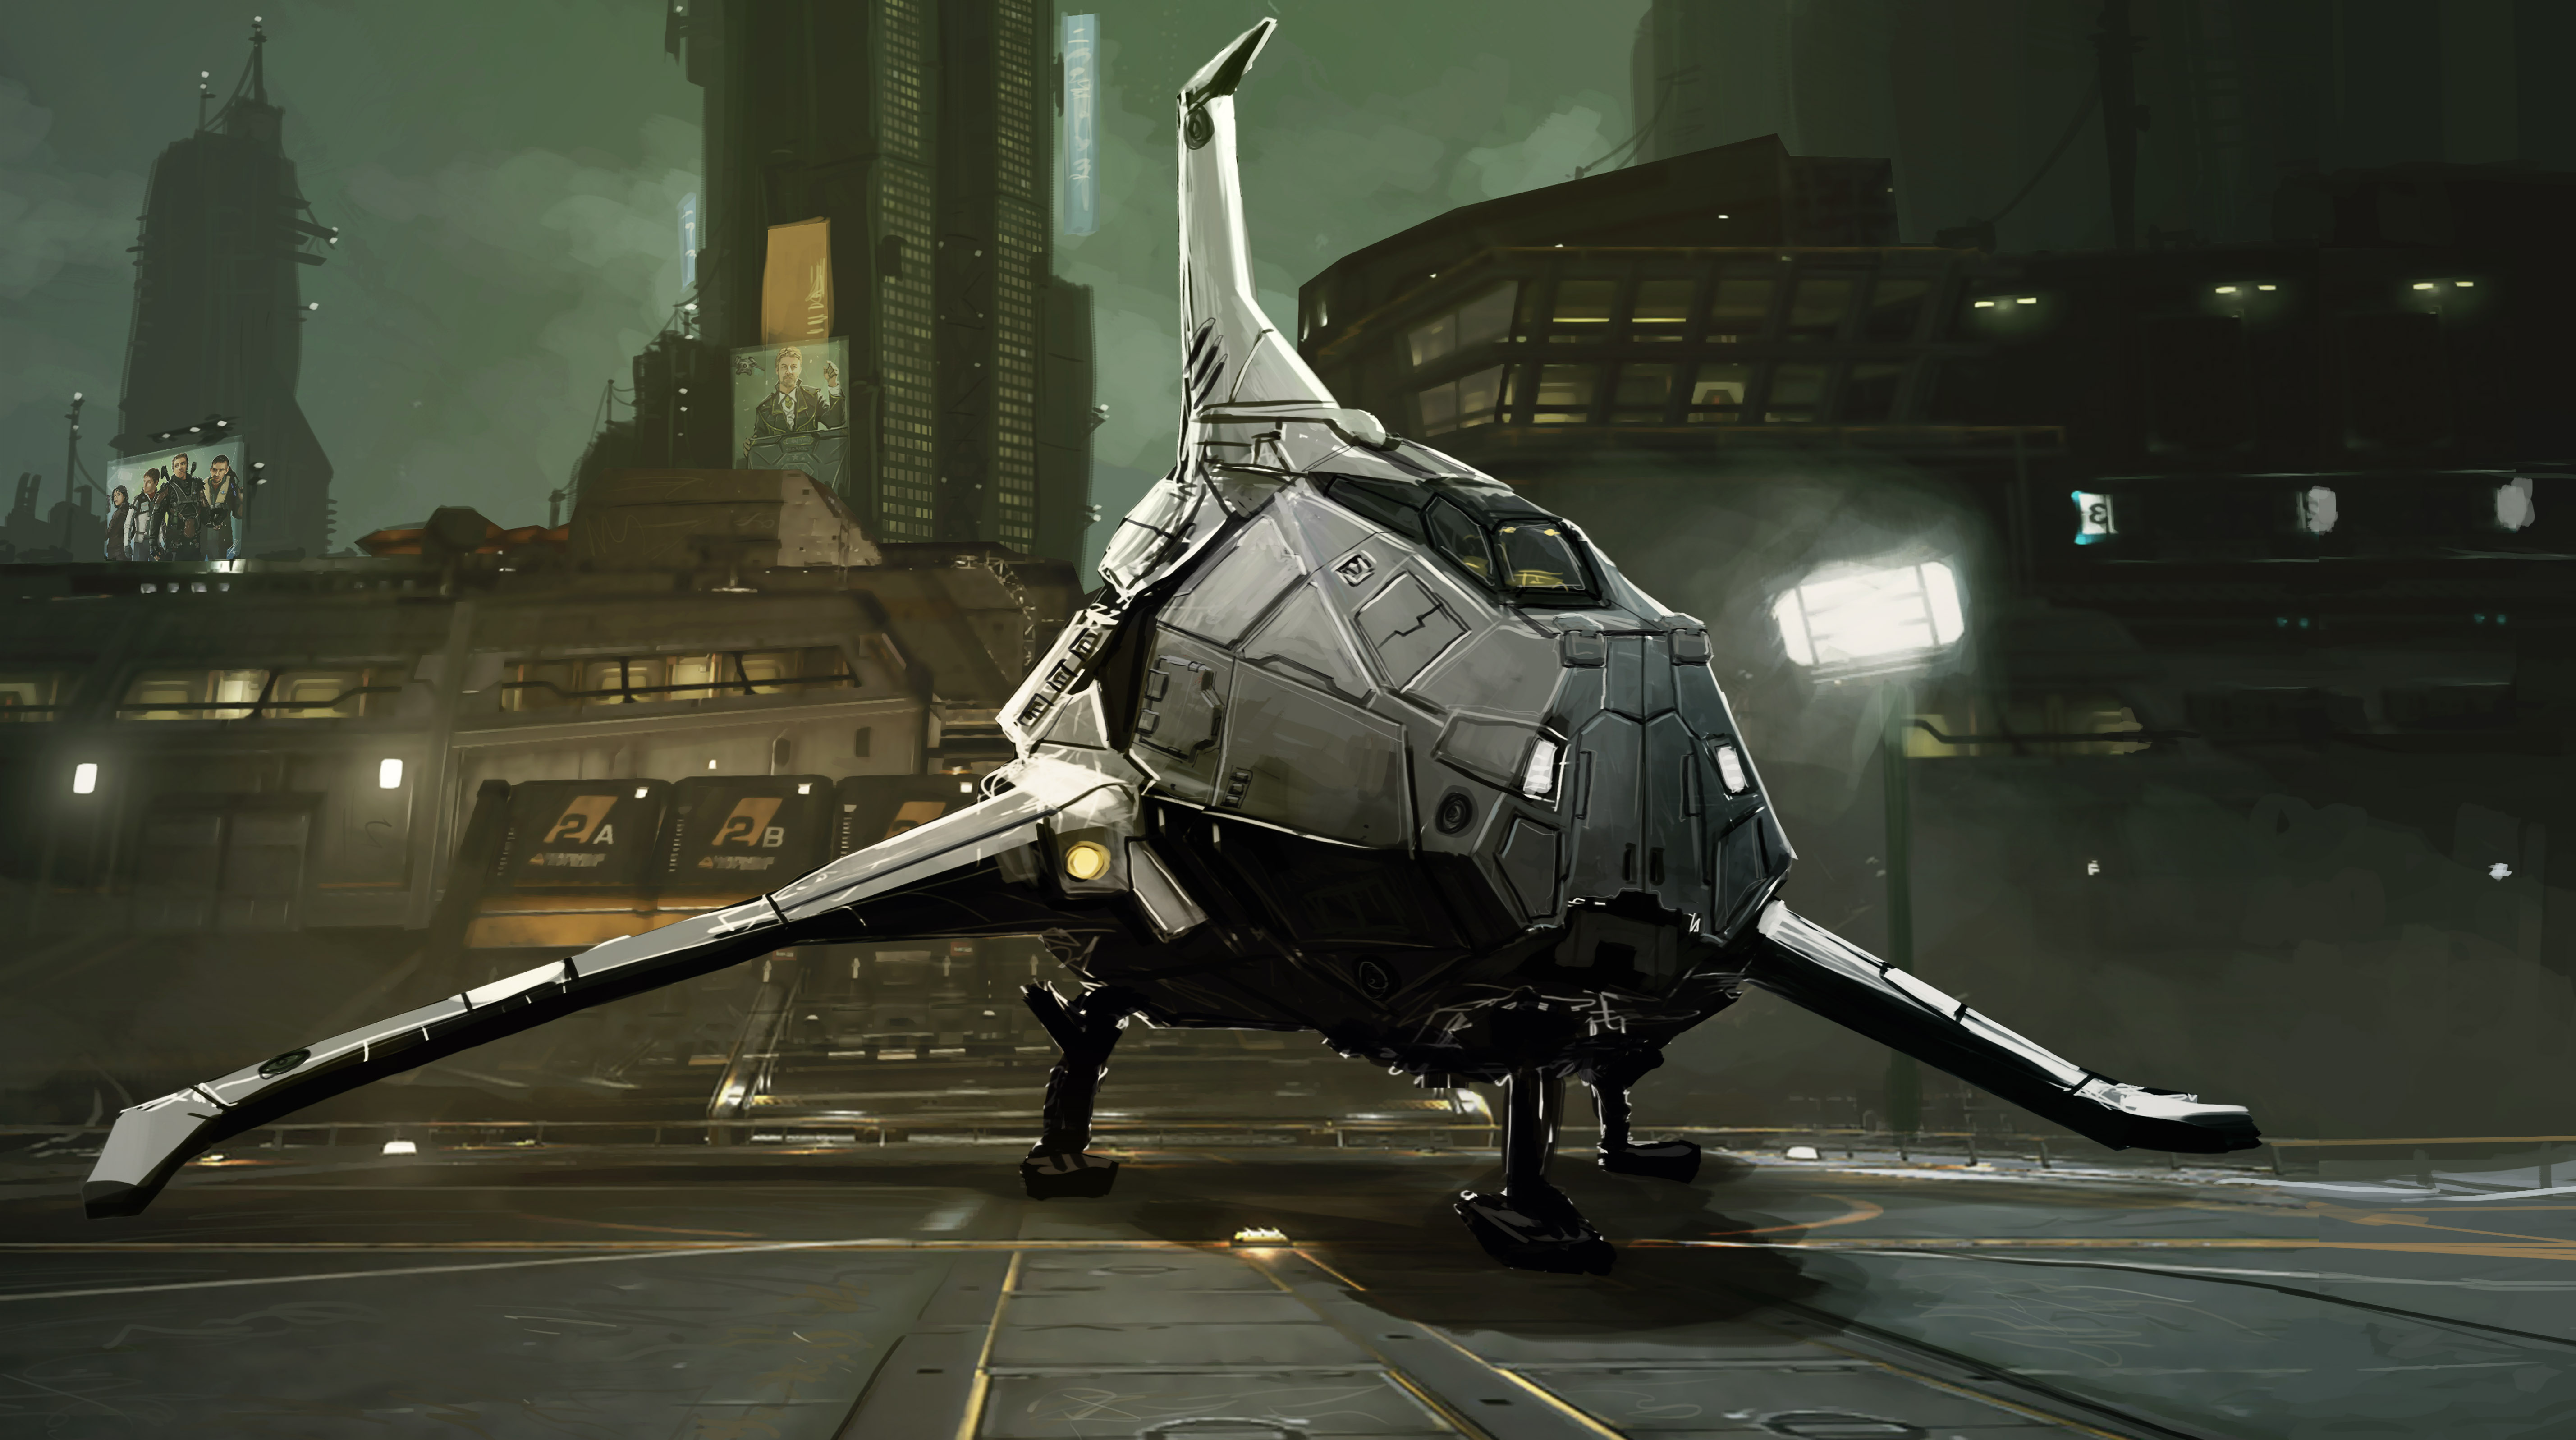 General 5714x3194 Elite: Dangerous science fiction vehicle futuristic video game art Kev-Art digital art